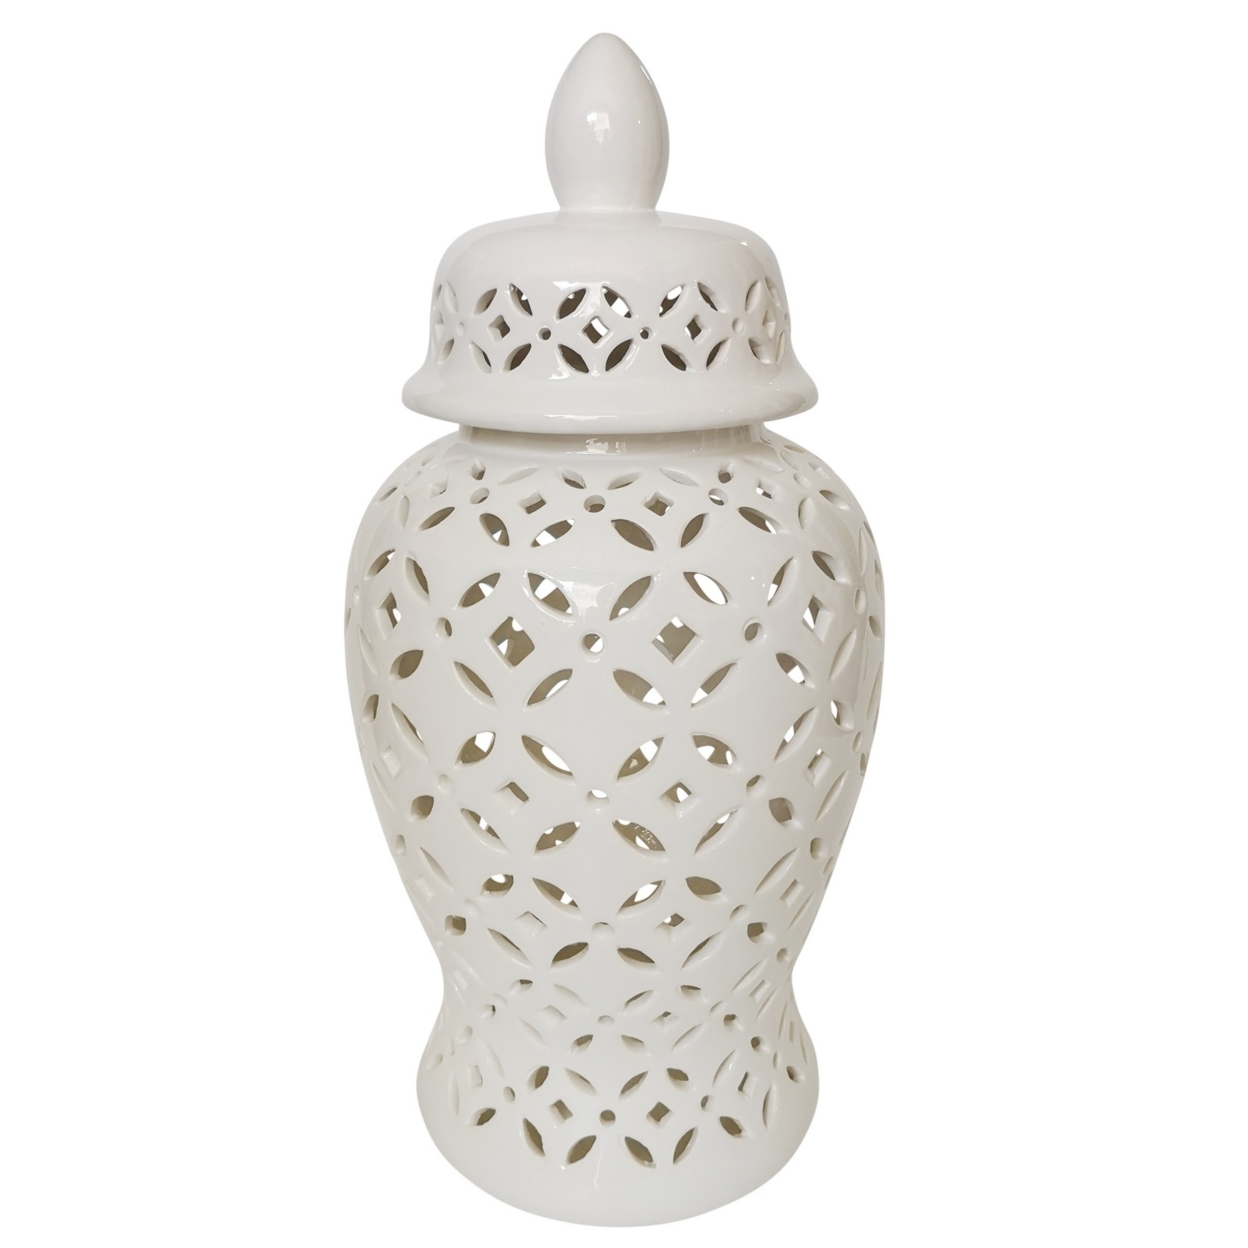 24 Inch Urn Shape Glass Jar With Cut Out Trellis Pattern, White- Saltoro Sherpi